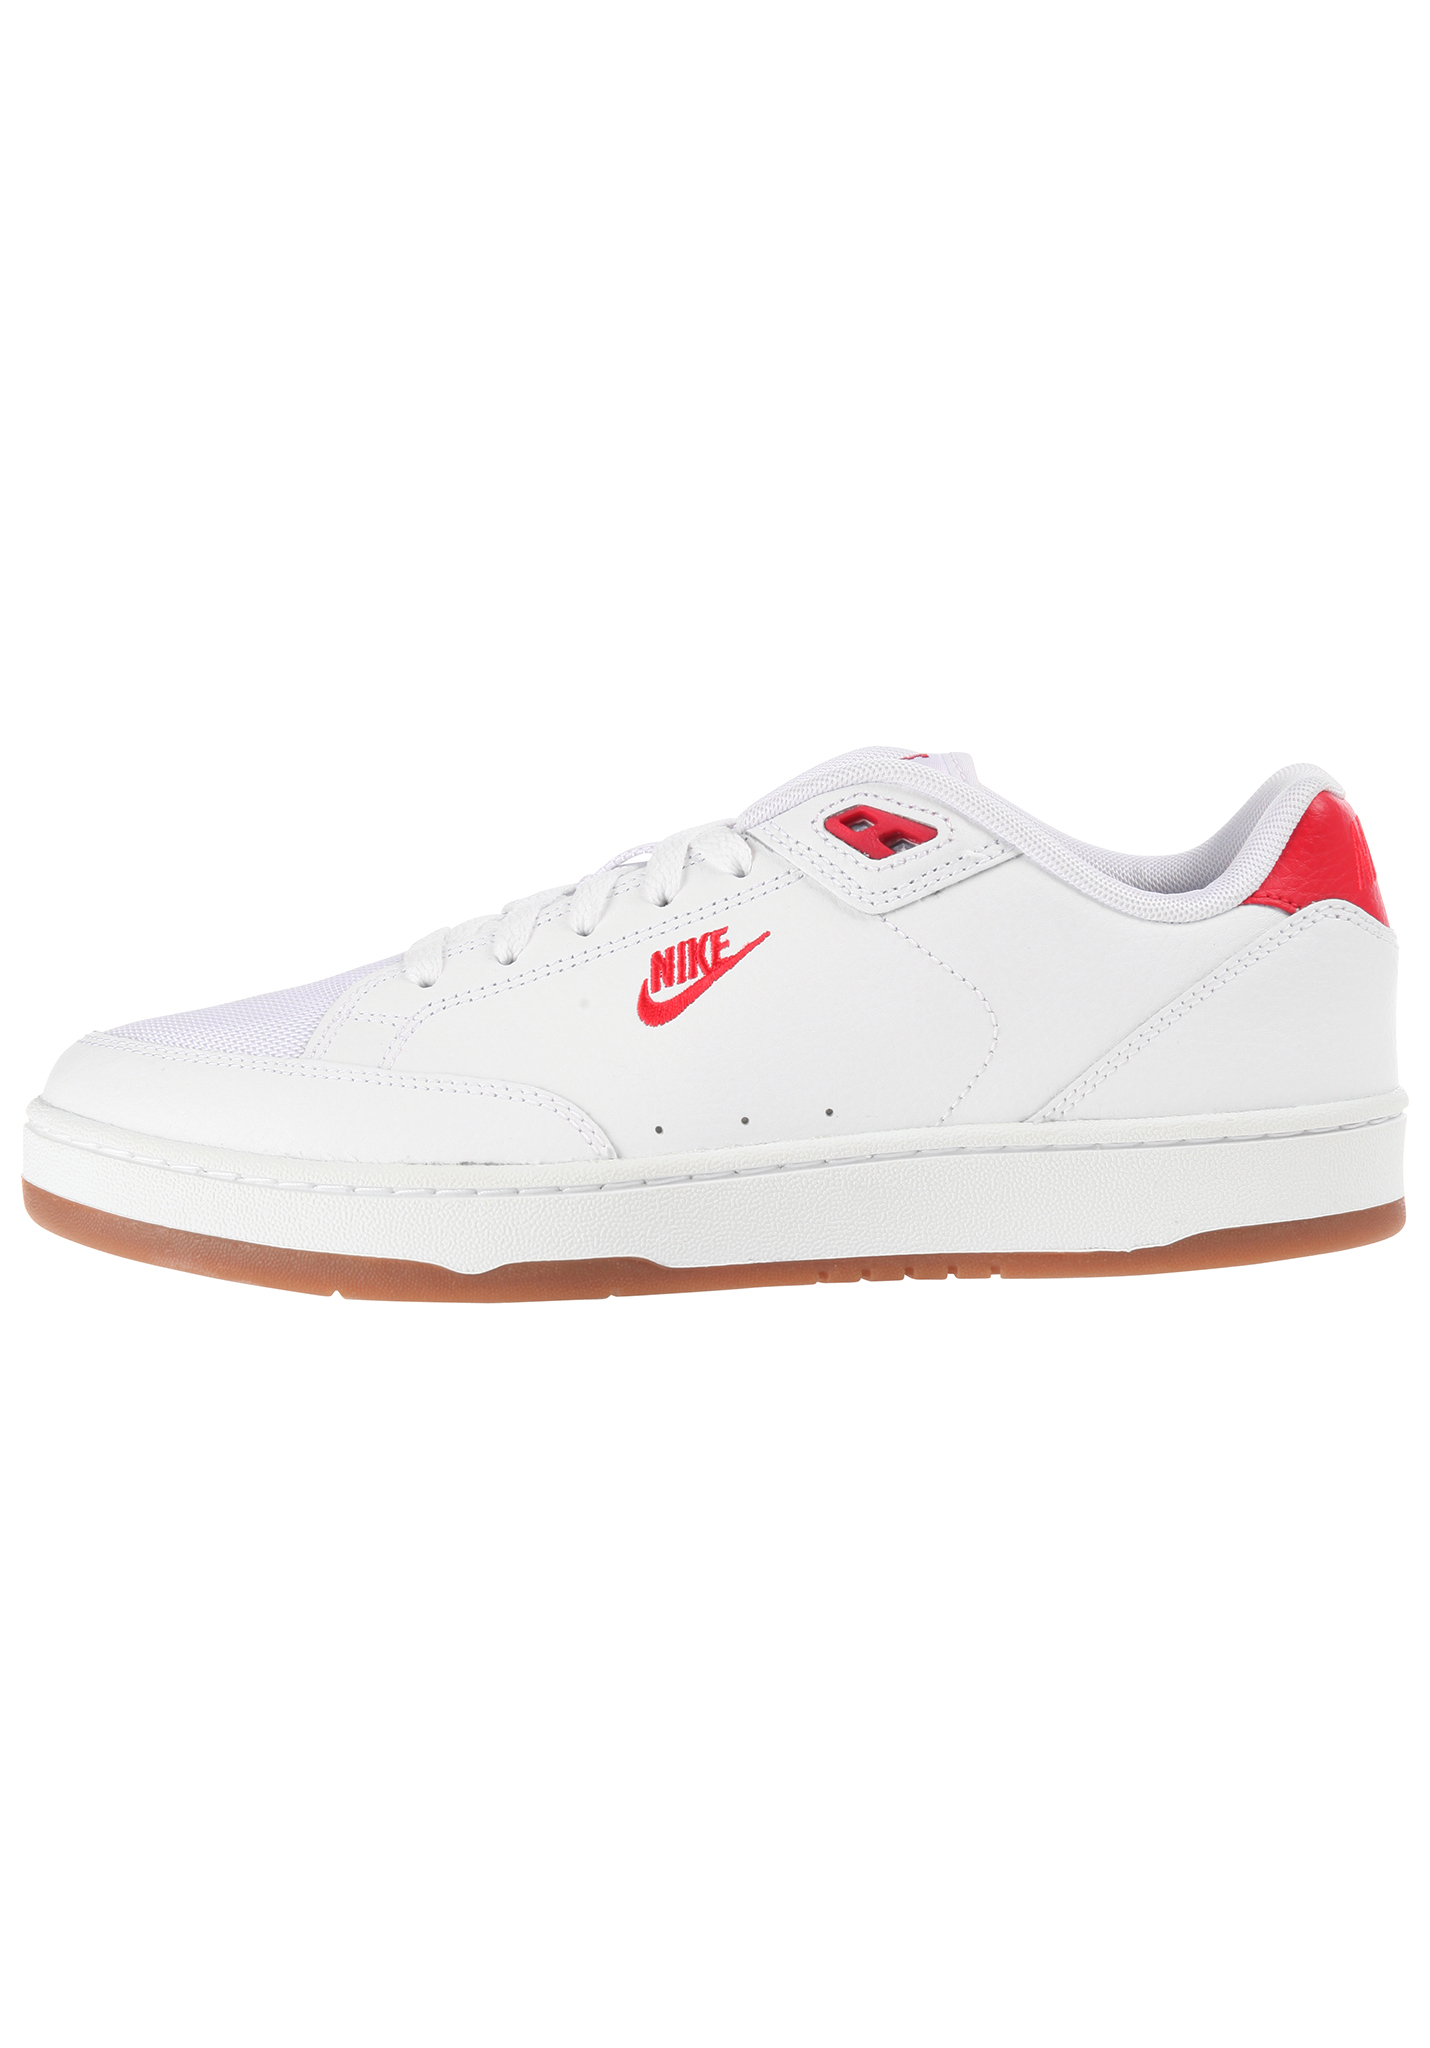 Nike Sportswear Grandstand II Premium Sneaker white/university red-gum med brown-black 48,5